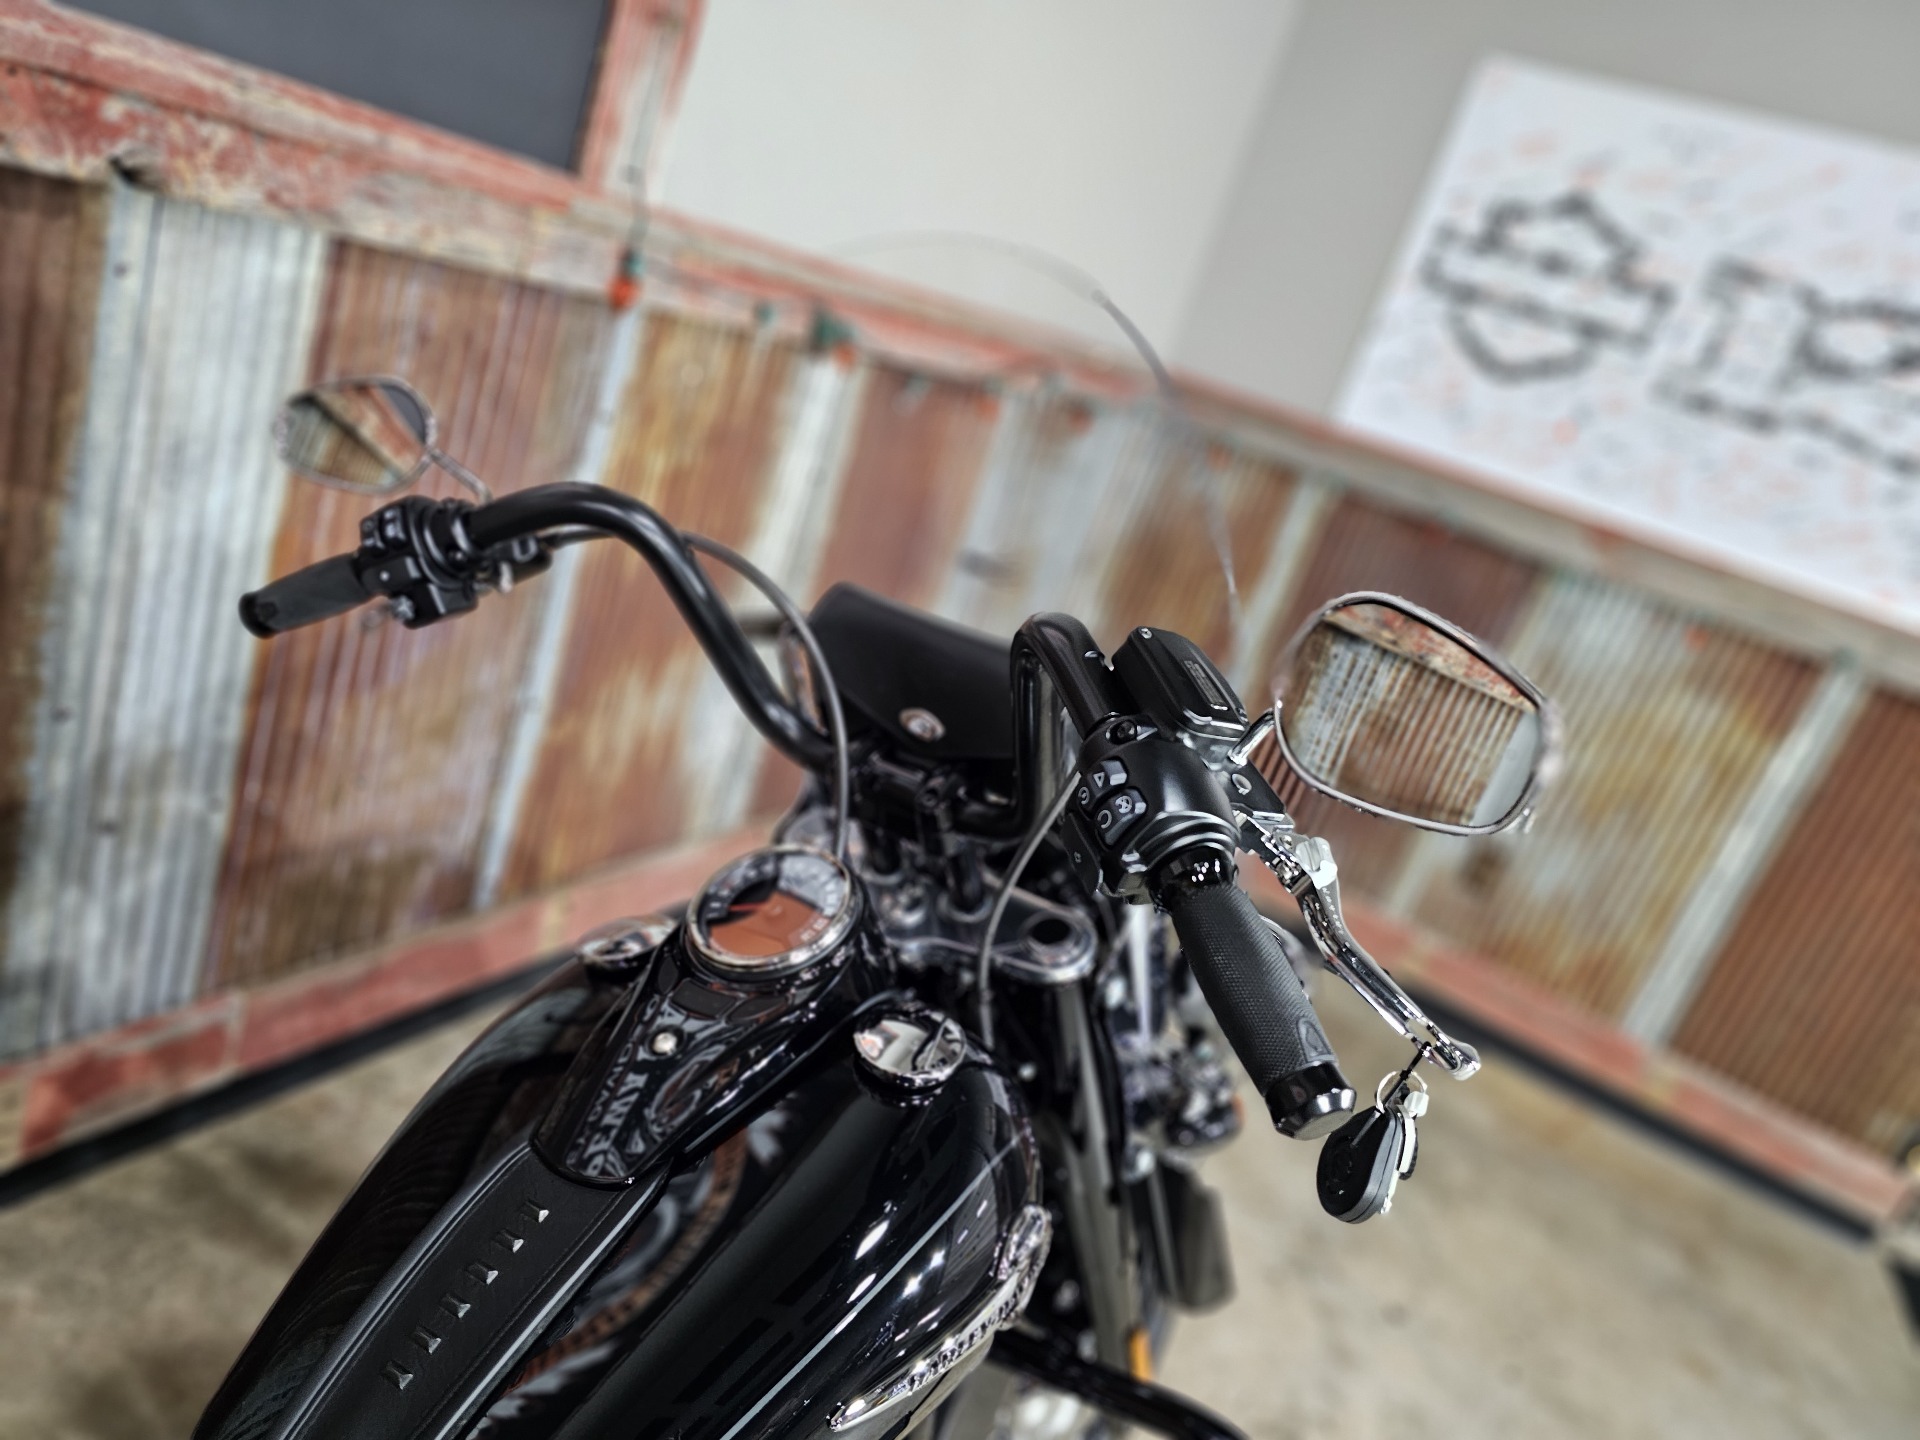 2020 Harley-Davidson Heritage Classic 114 in Chippewa Falls, Wisconsin - Photo 12